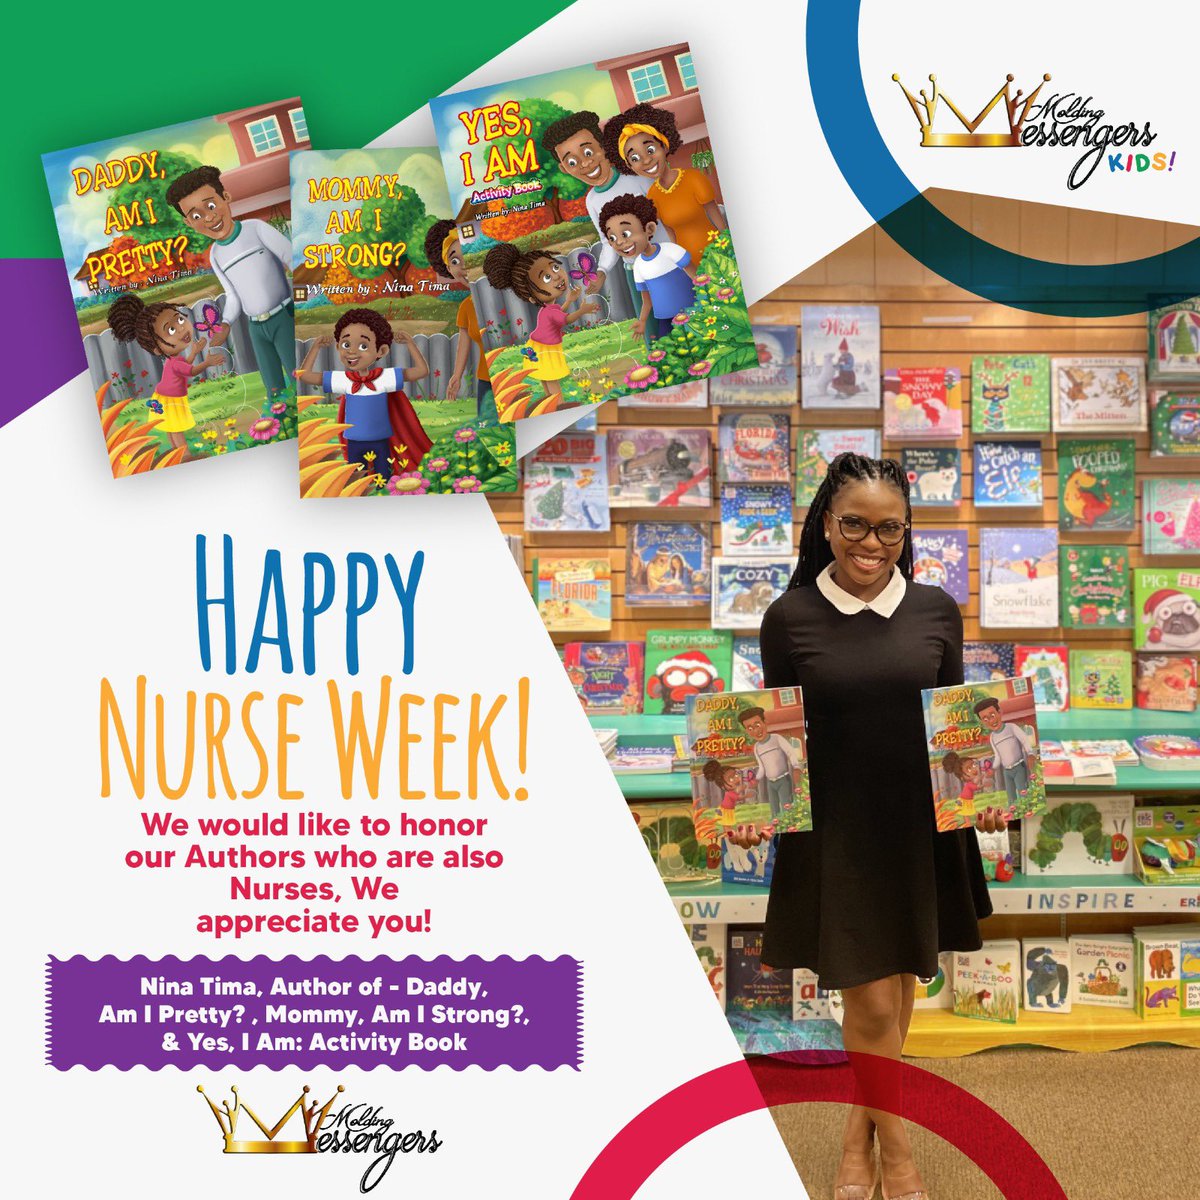 An Author and a superhero! We appreciate you Nina. Happy Nurses Week! 

#nurseweek #happynursesweek